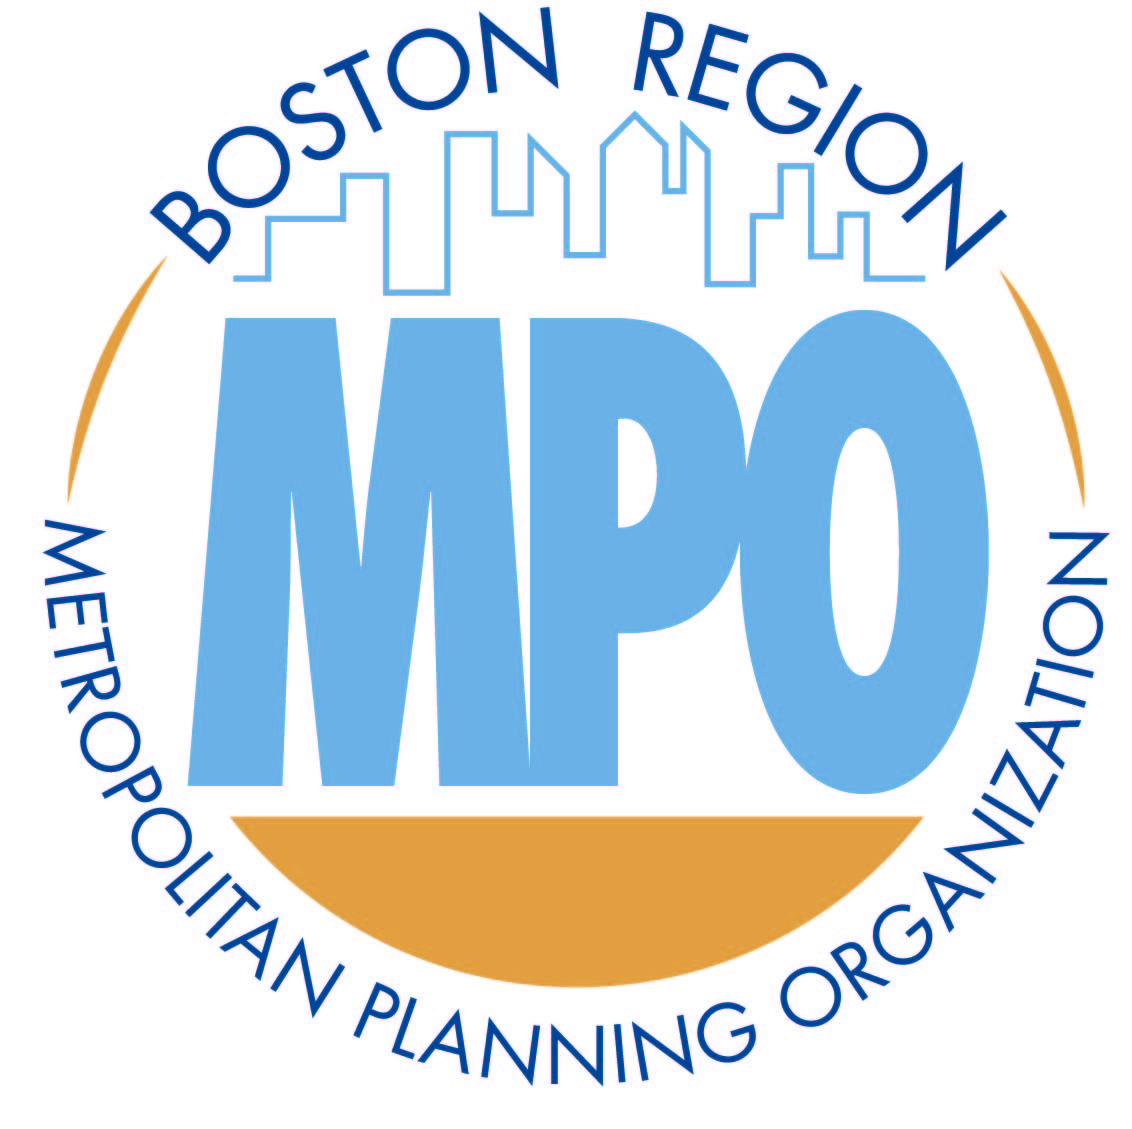 Bostong Region Metropolitan Planning Organization logo